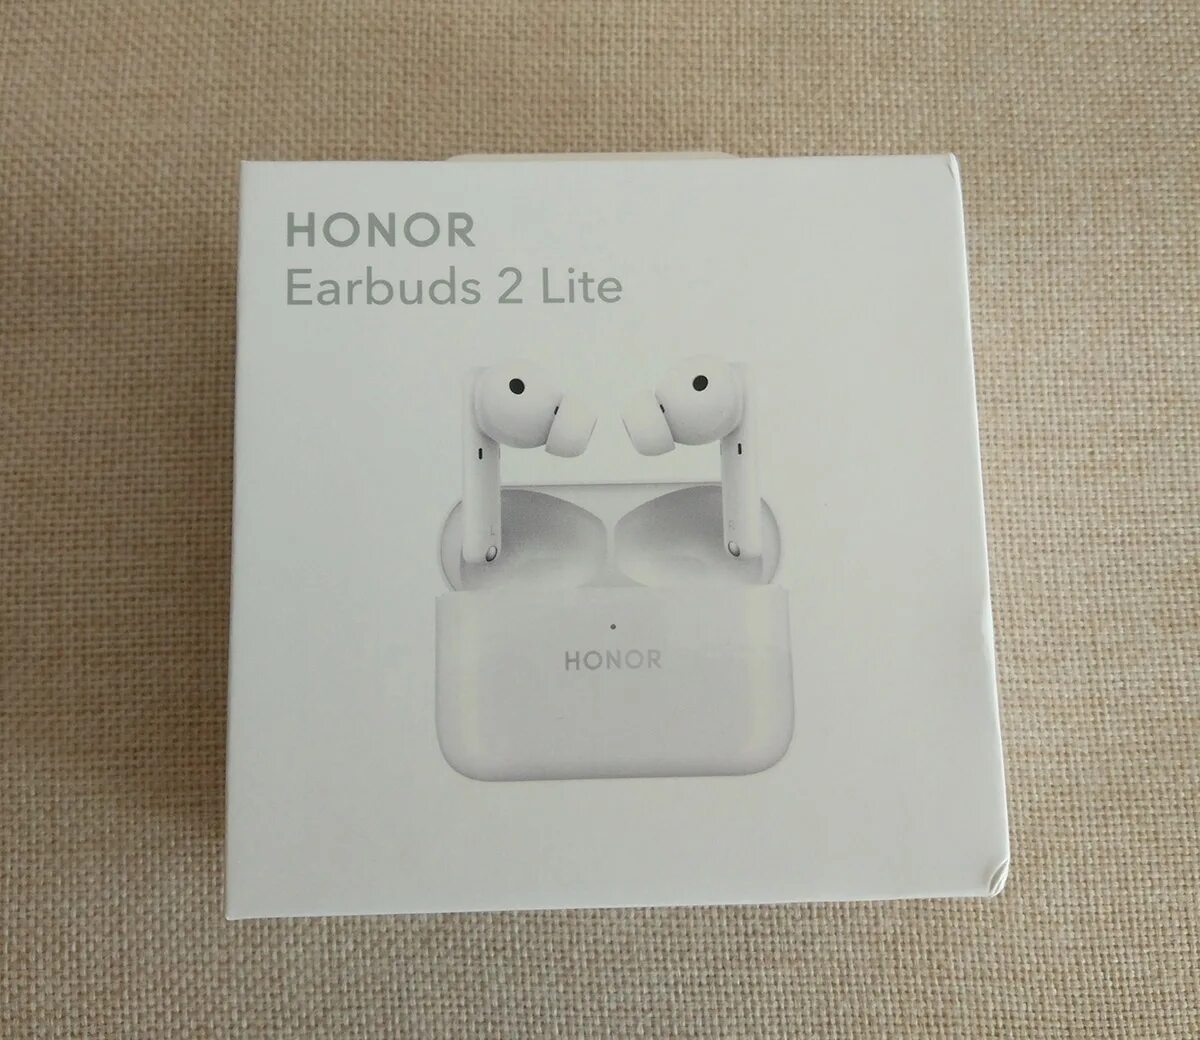 Huawei al life наушники. Наушники хонор Earbuds 2 Lite. Honor Earbuds 2 Lite t0005. Наушники хонор Earbuds 2 Lite коробка. TWS Honor Earbuds 2 Lite приложение.